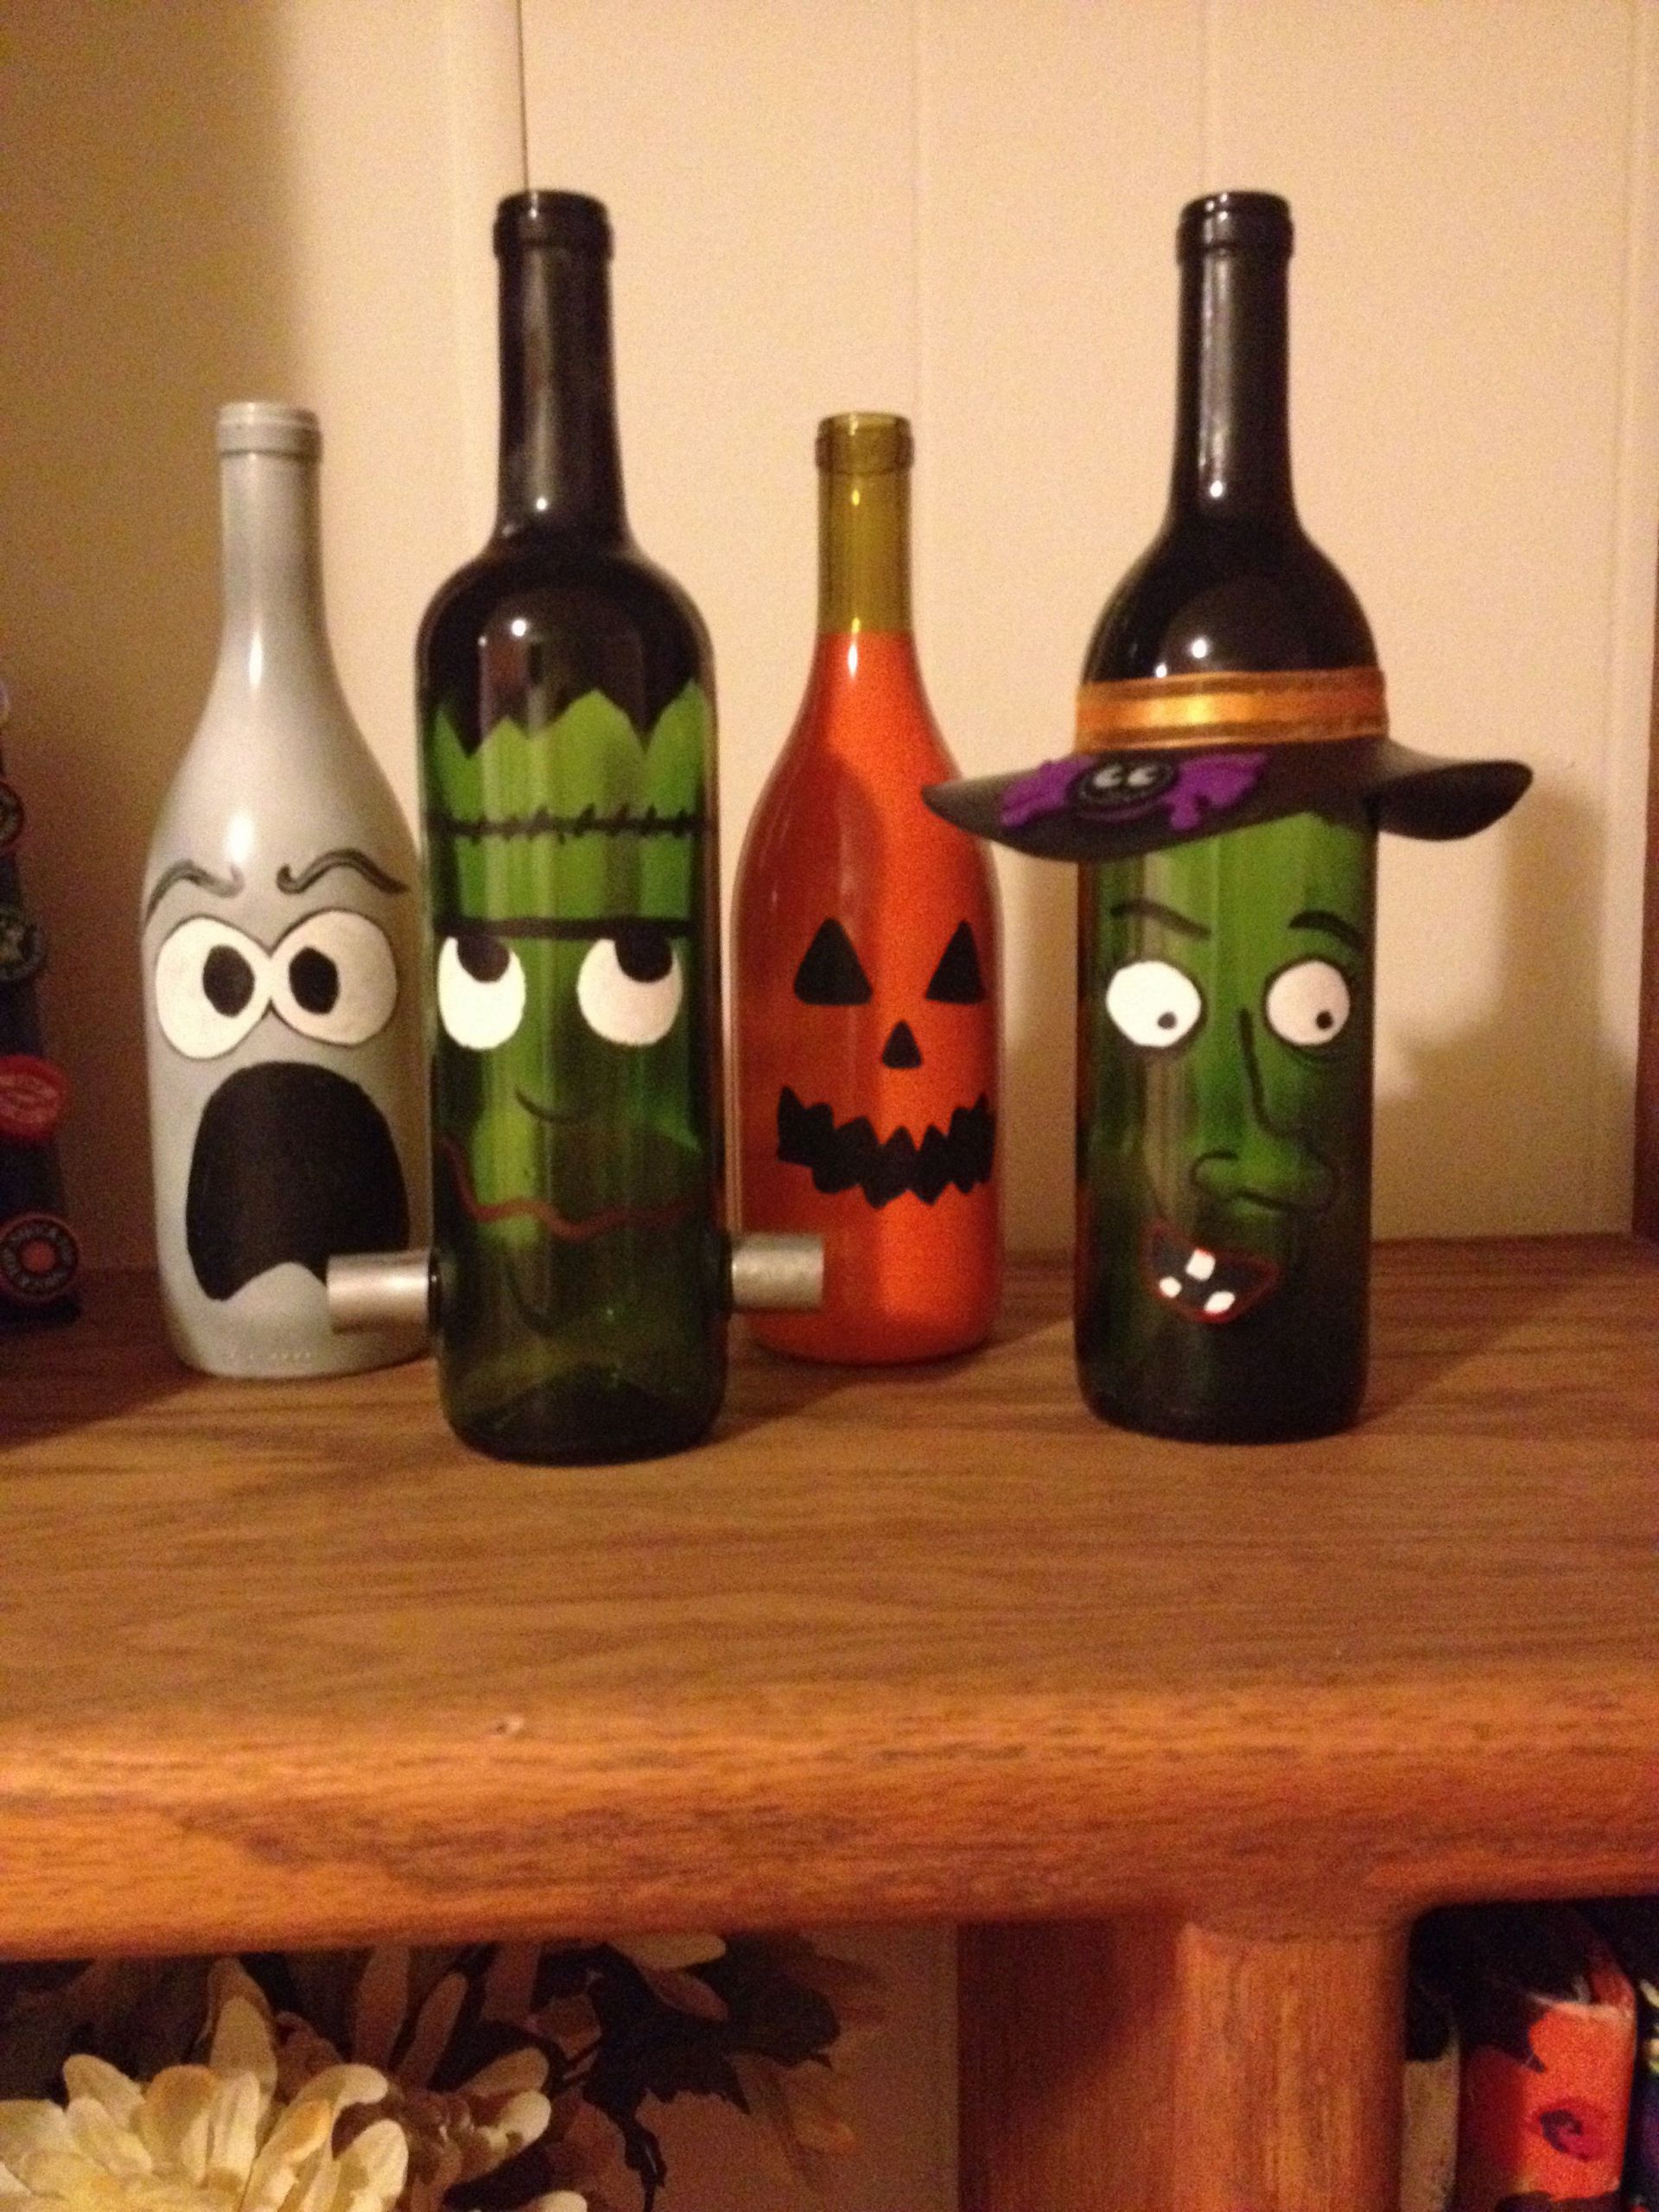 DIY Wine Bottle Decorations
 Painted wine bottle decor halloween diy Origami Owl